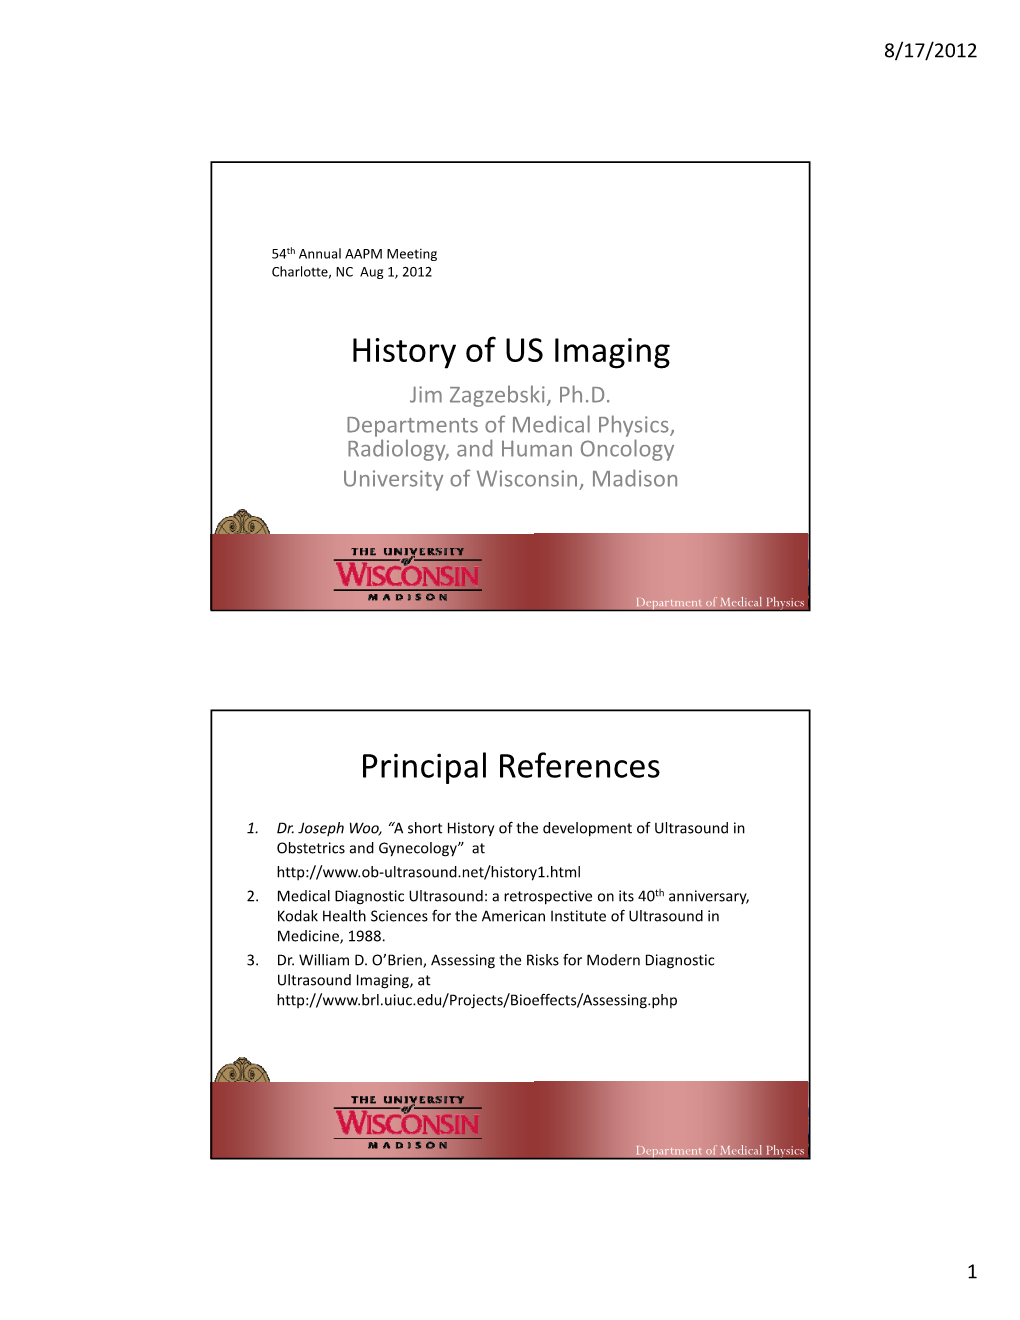 History of US Imaging Principal References